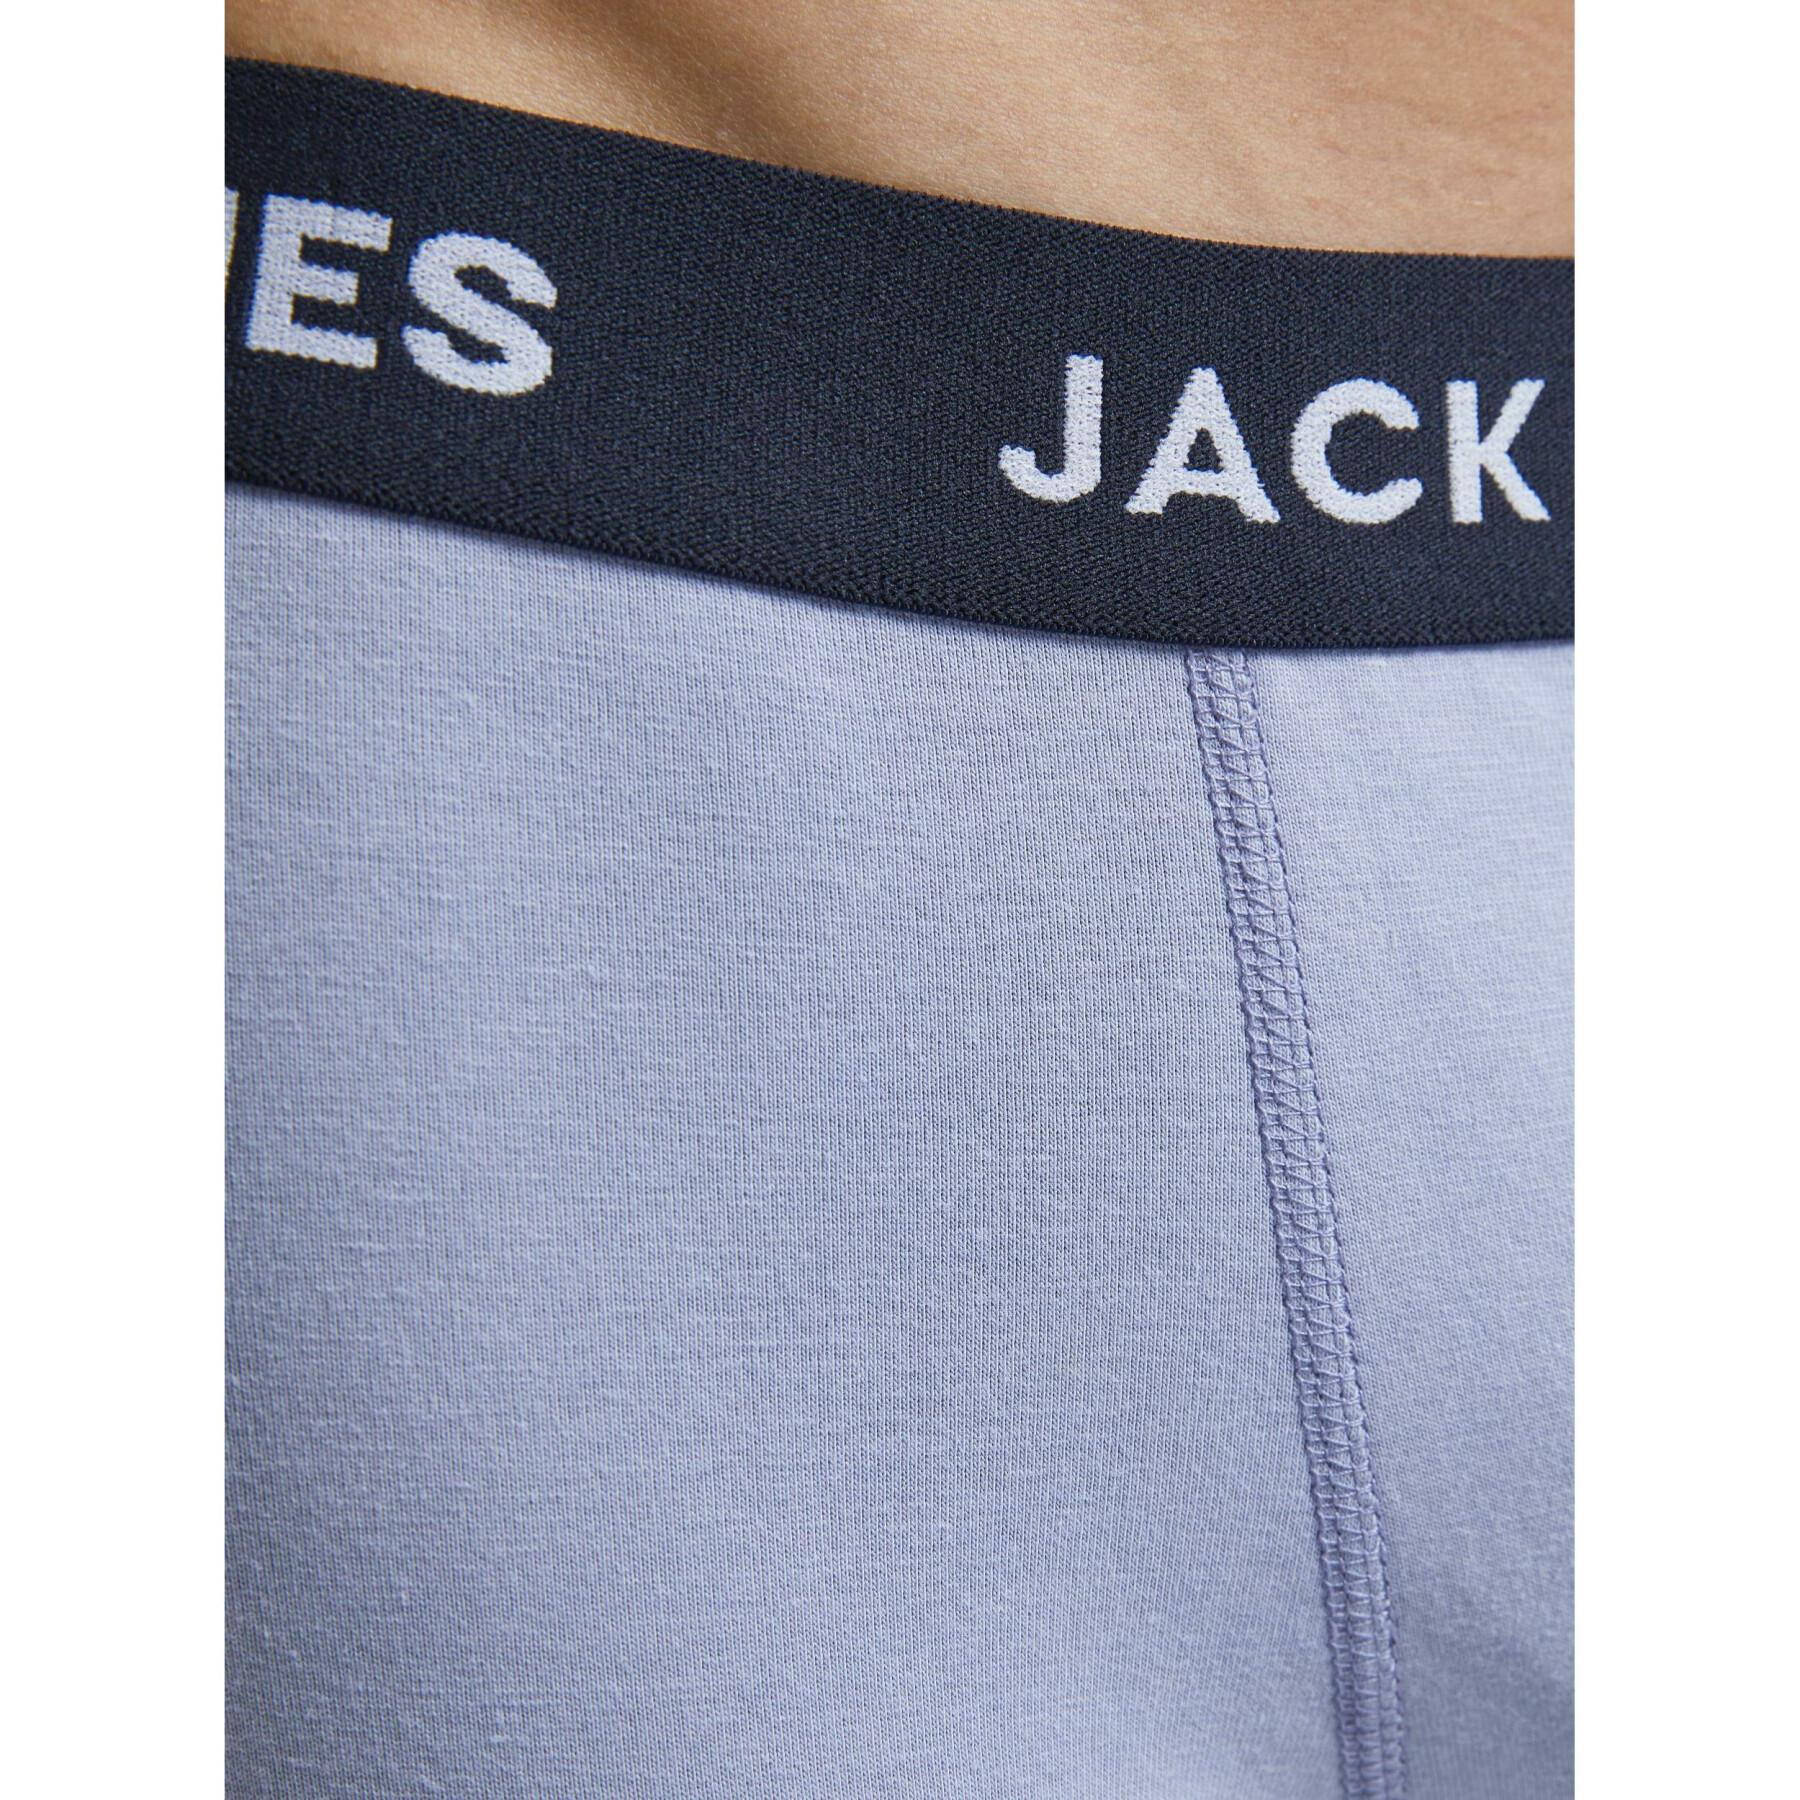 Set of 2 boxer shorts Jack & Jones Jacpierre